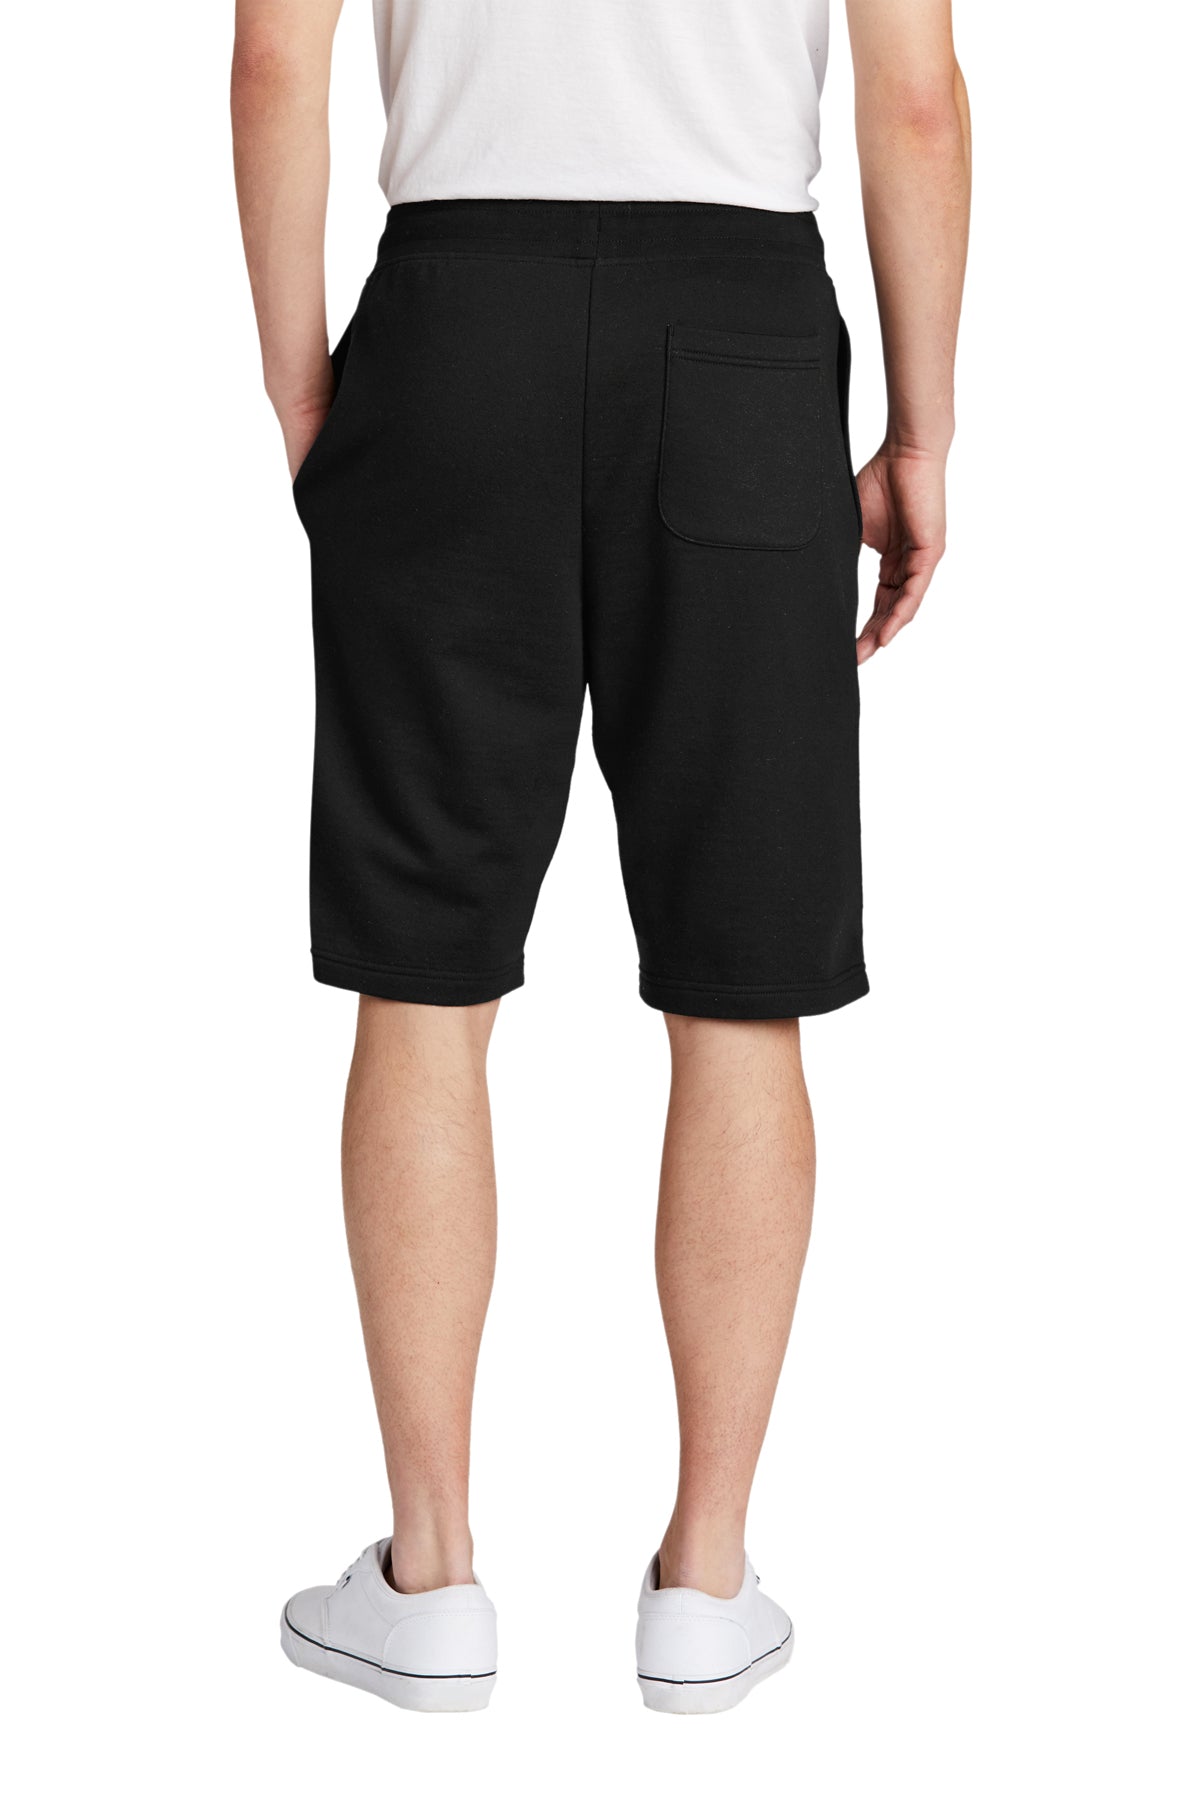 Bistro603 Mens Fleece Shorts